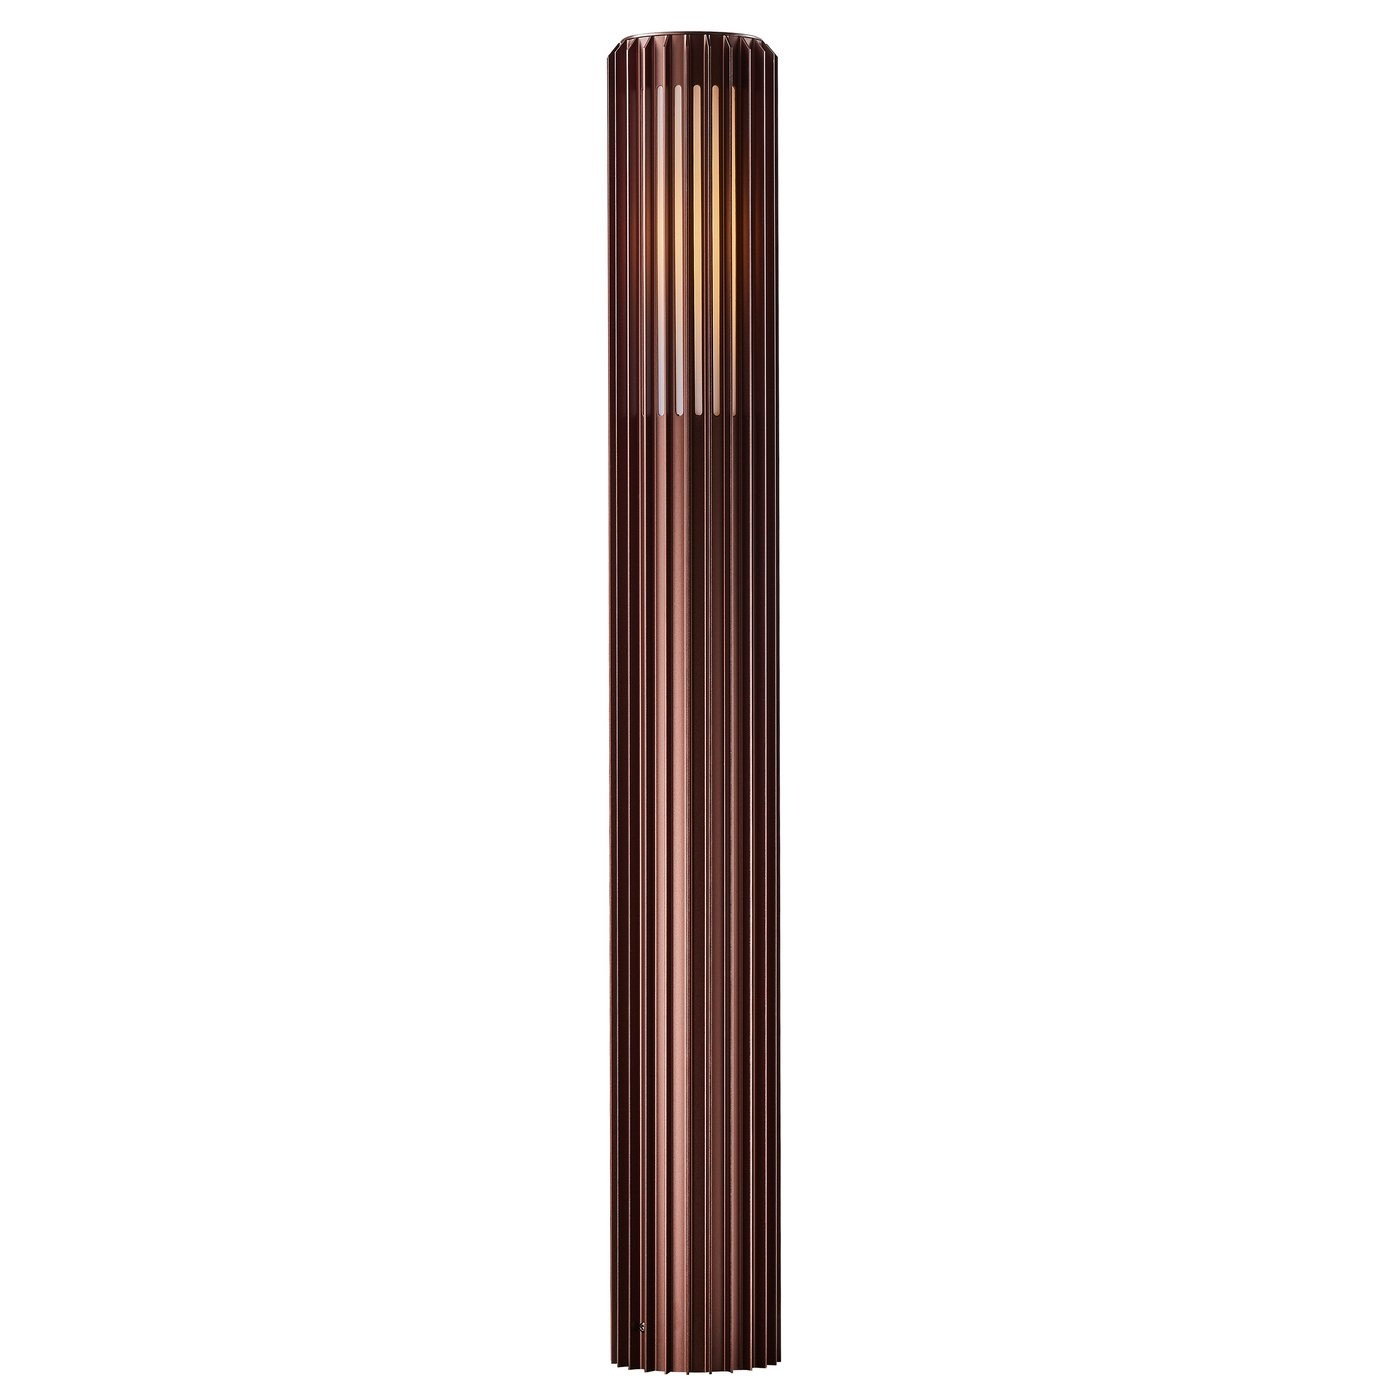 Nordlux Buitenlamp Aludra paal H 95 cm bruin metallic